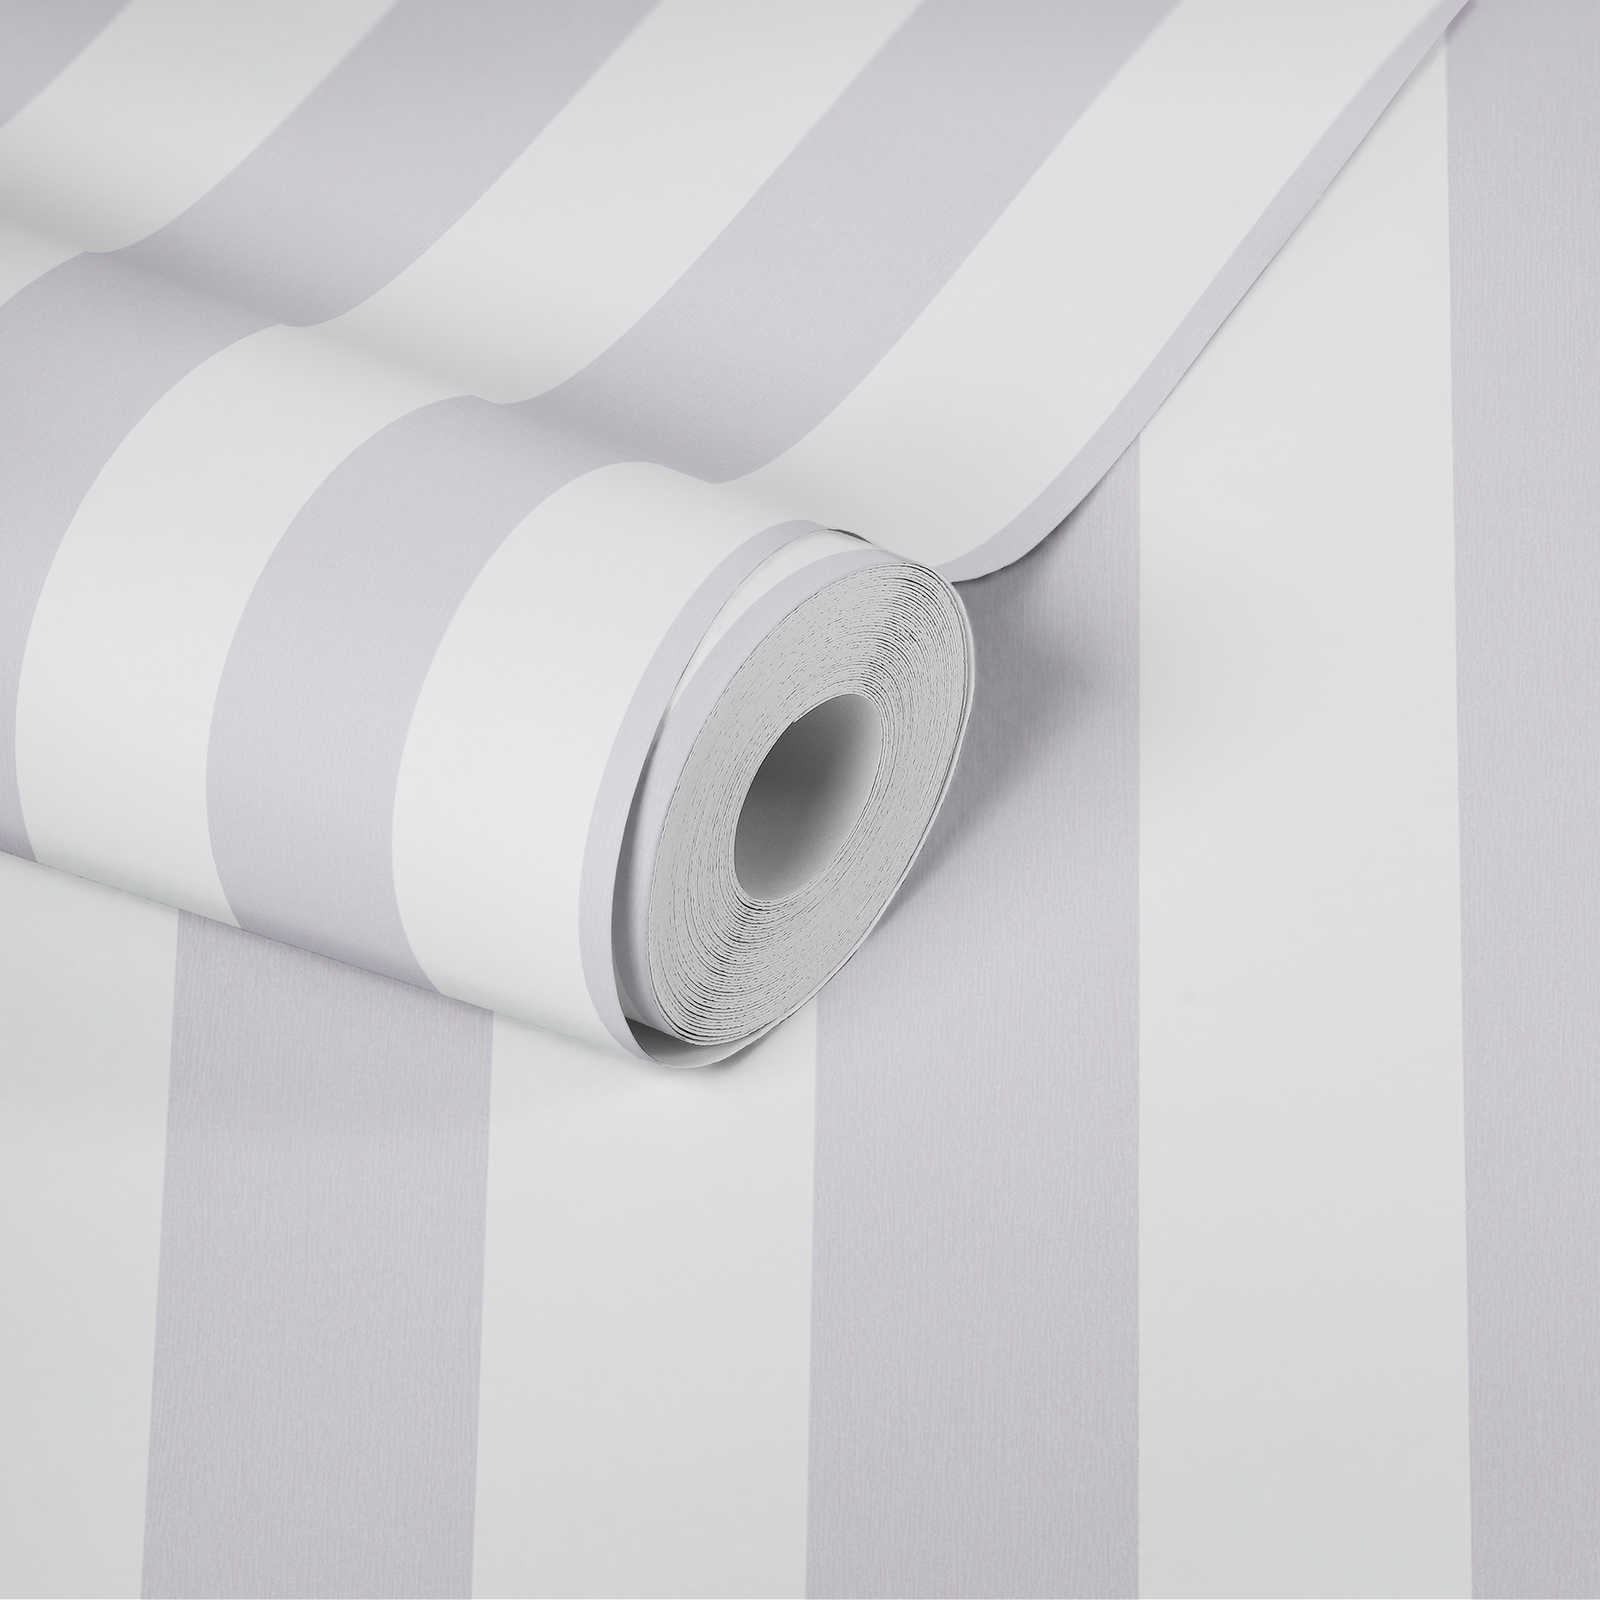             Nursery wallpaper vertical stripes - grey, white
        